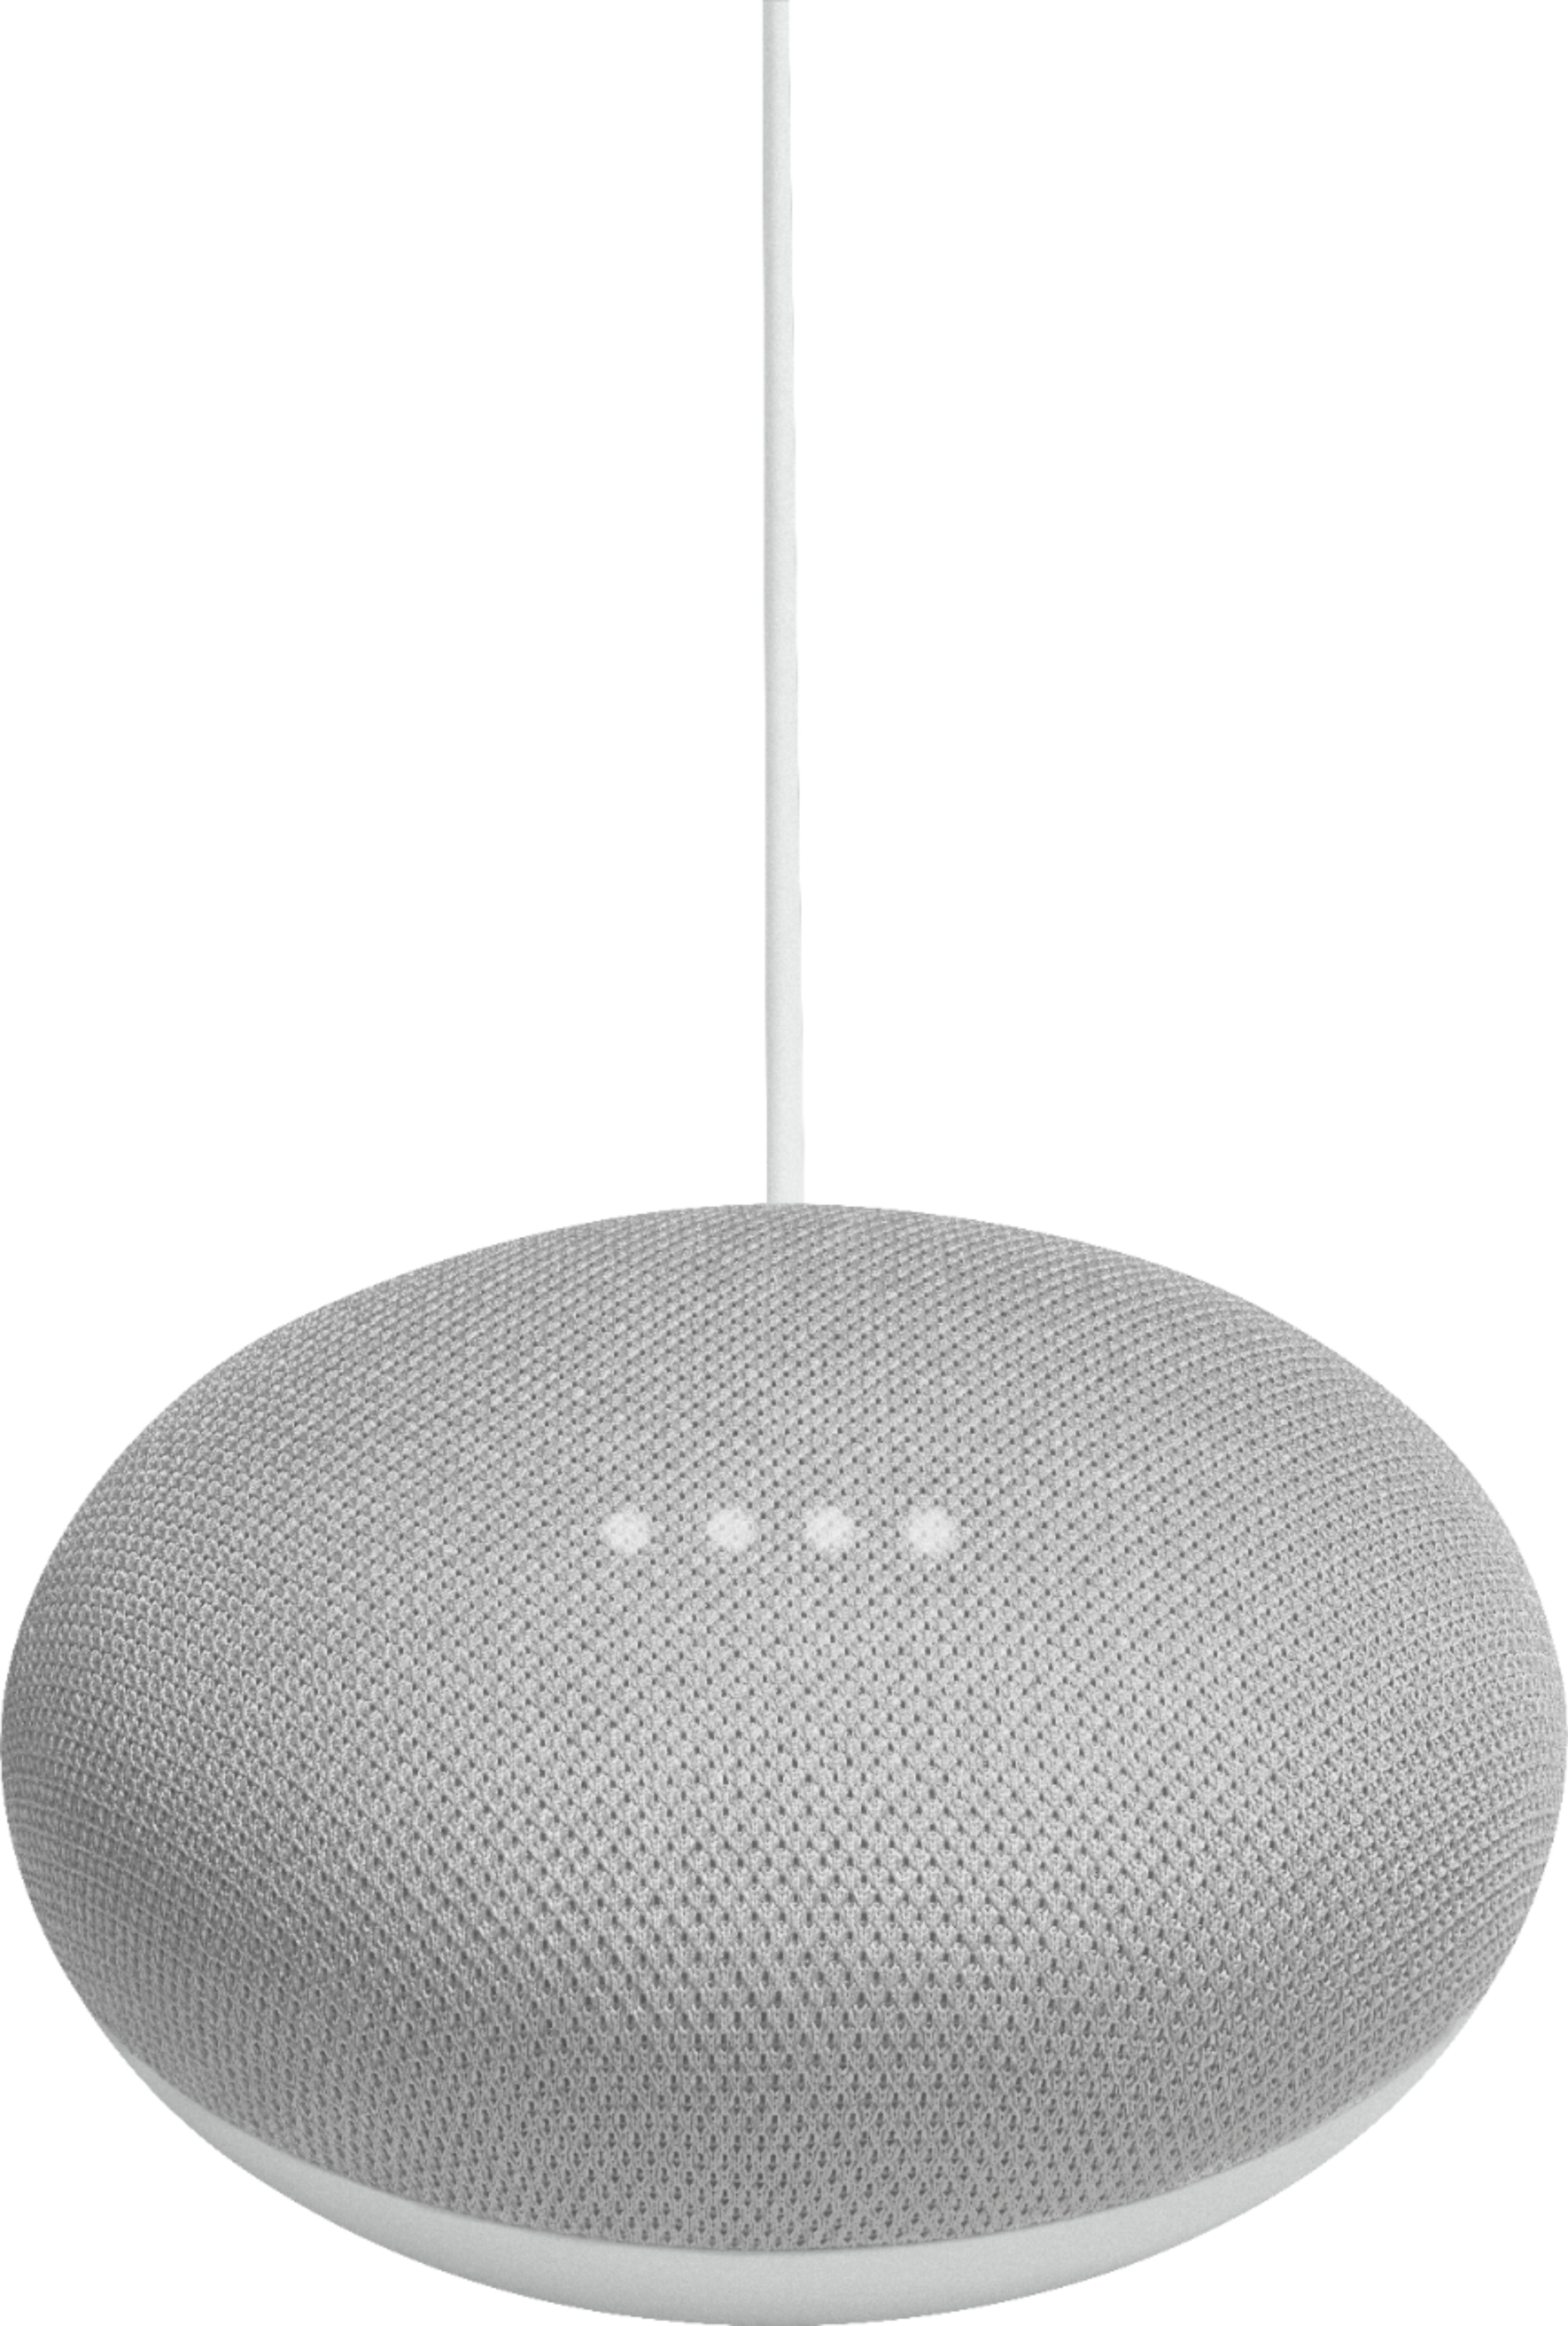 Chalk Google Home Mini Wireless Smart Speaker 